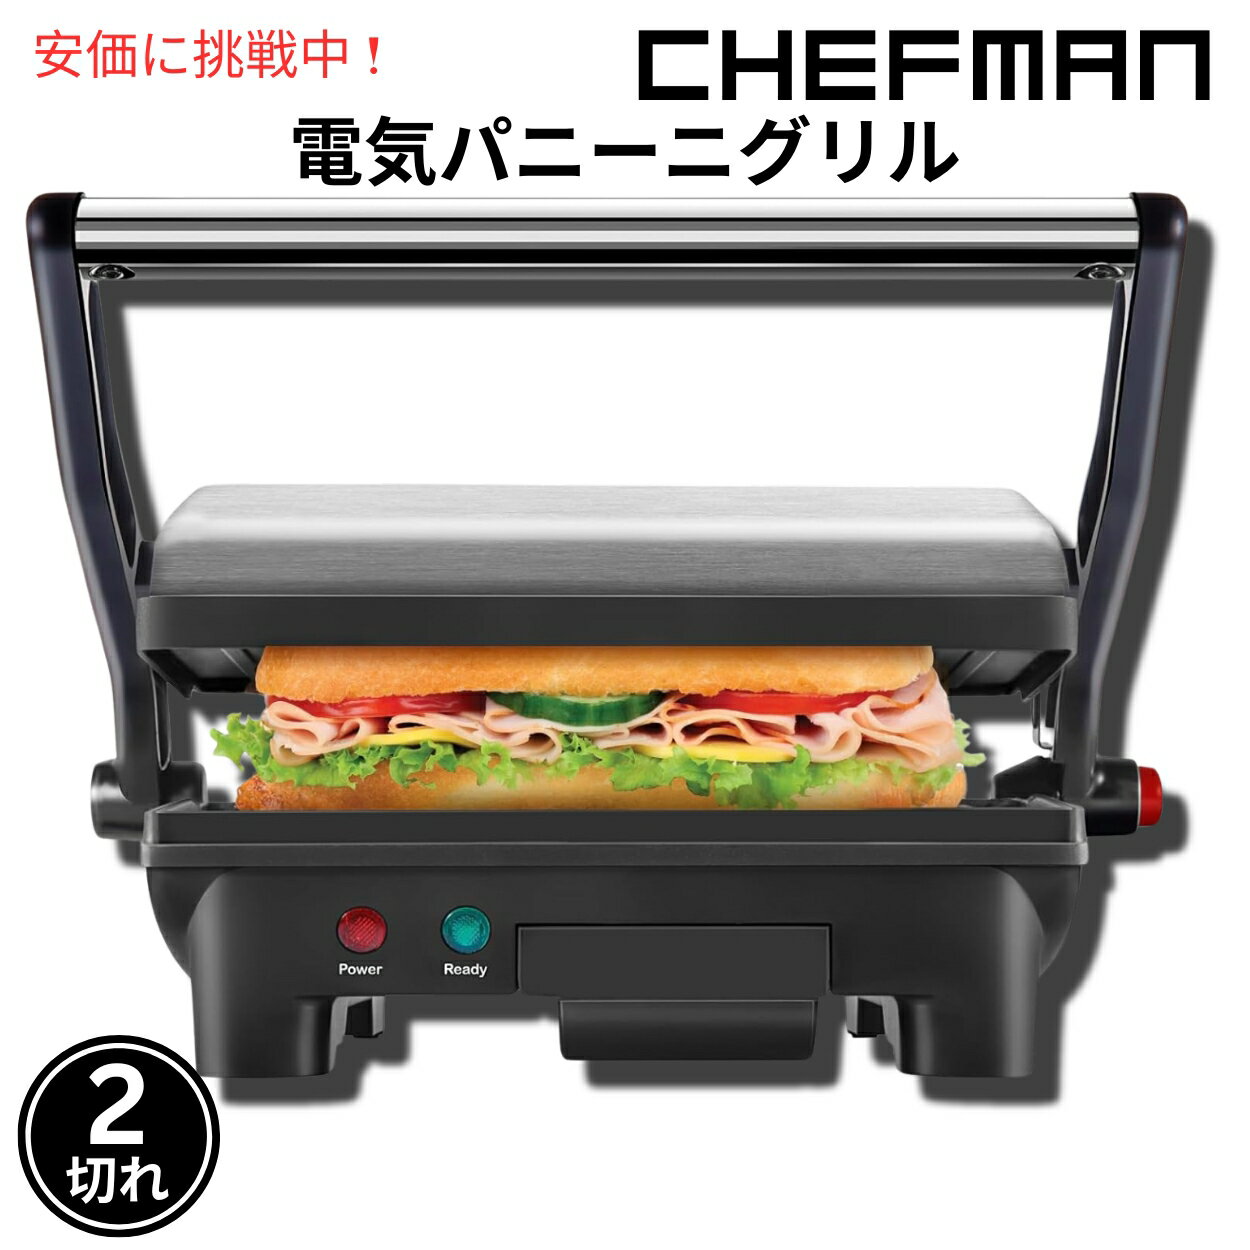 Chefman Electric Panini Press Grill and Sandwich Maker RJ02-180 シェフマン パニーニプレスグリル サンドイッチメーカー ノンスティック 2スライス用